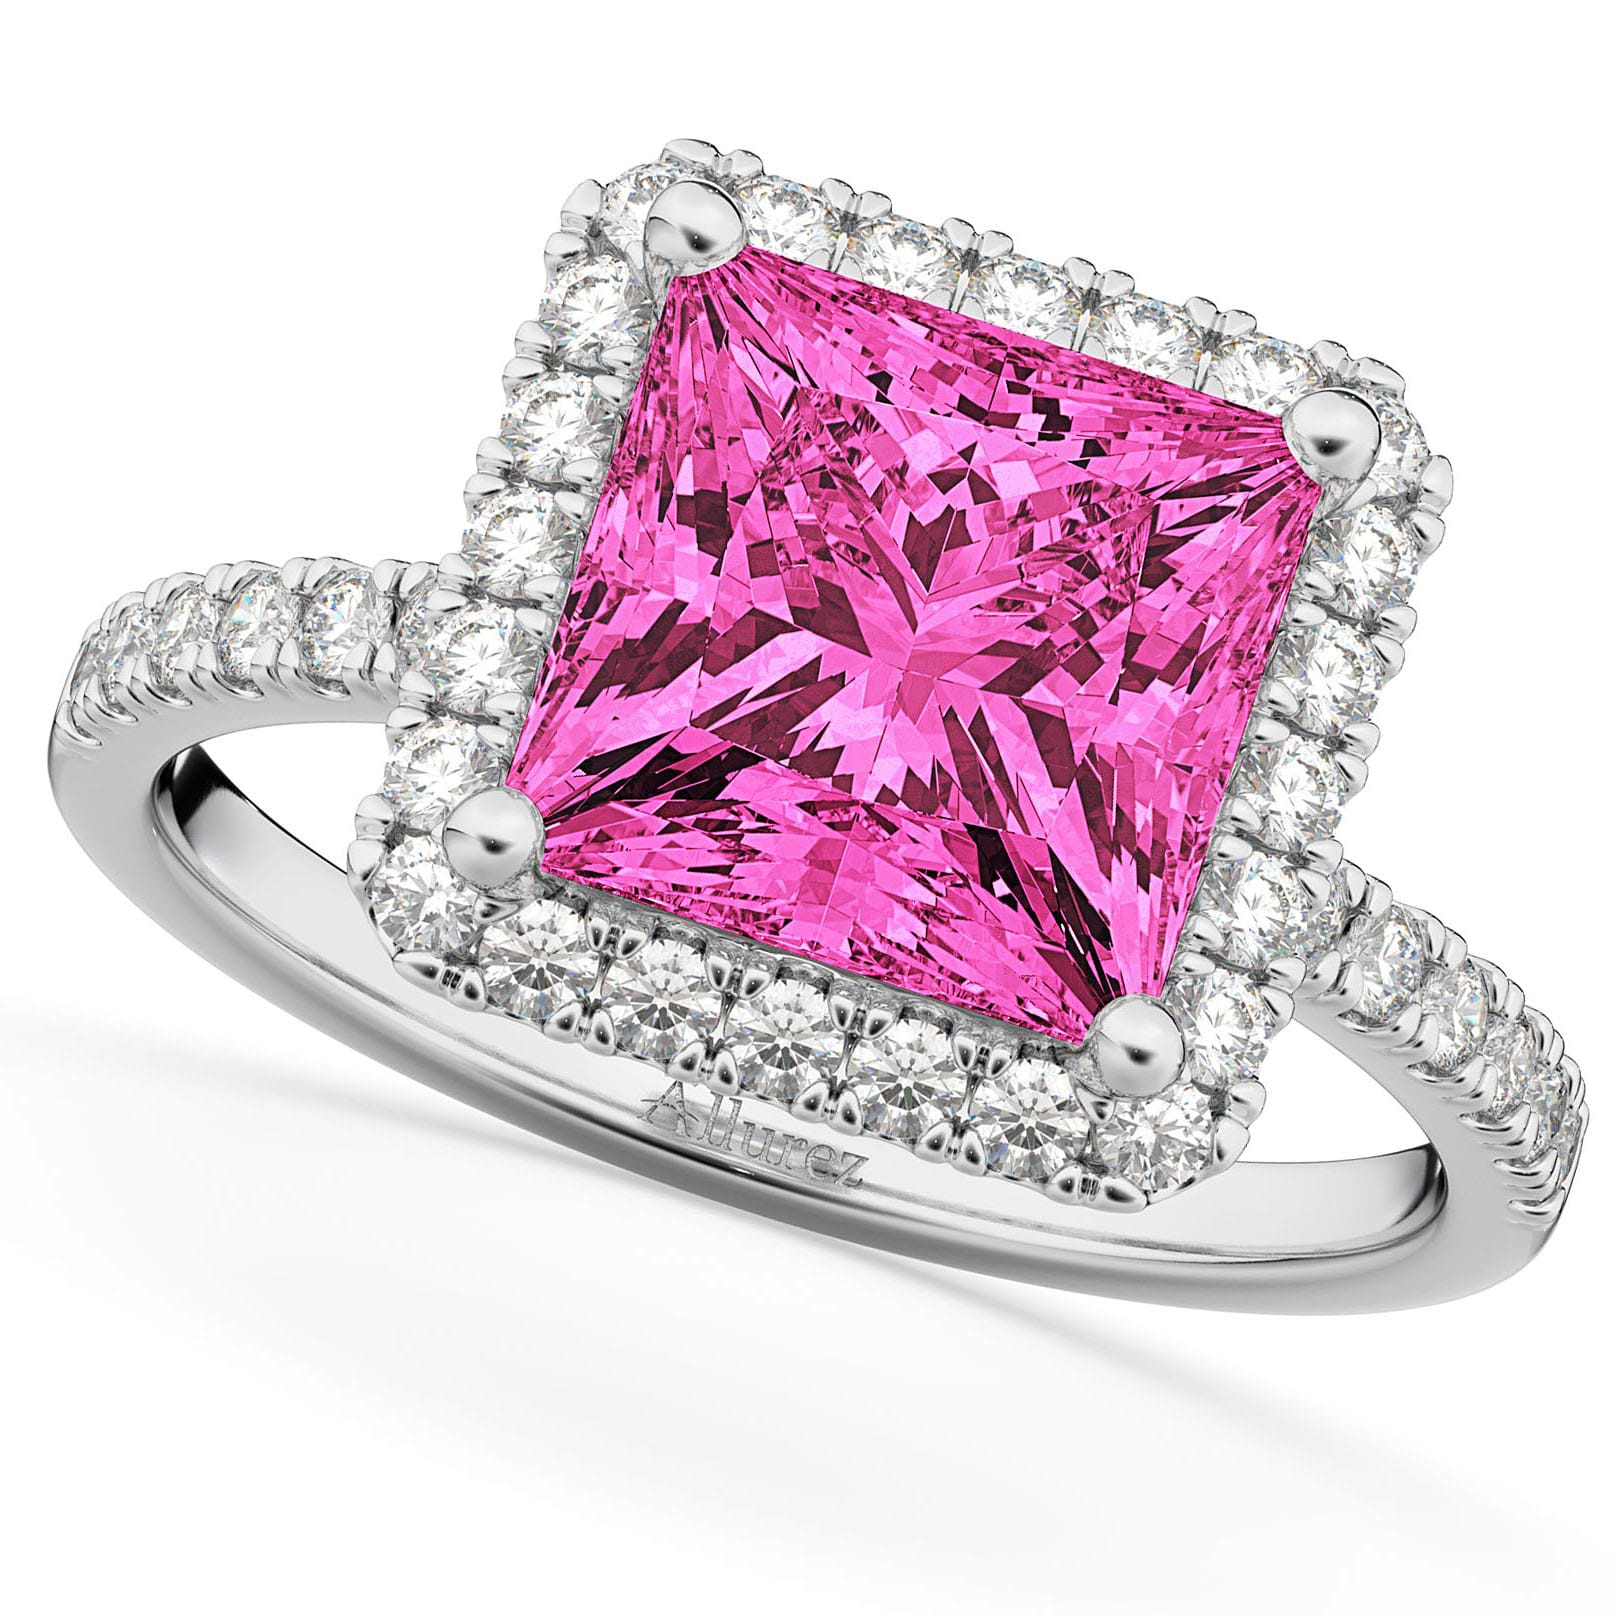 Pink Tourmaline & Diamonds Princess-Cut Halo Bridal Set 14K White Gold (3.74ct)